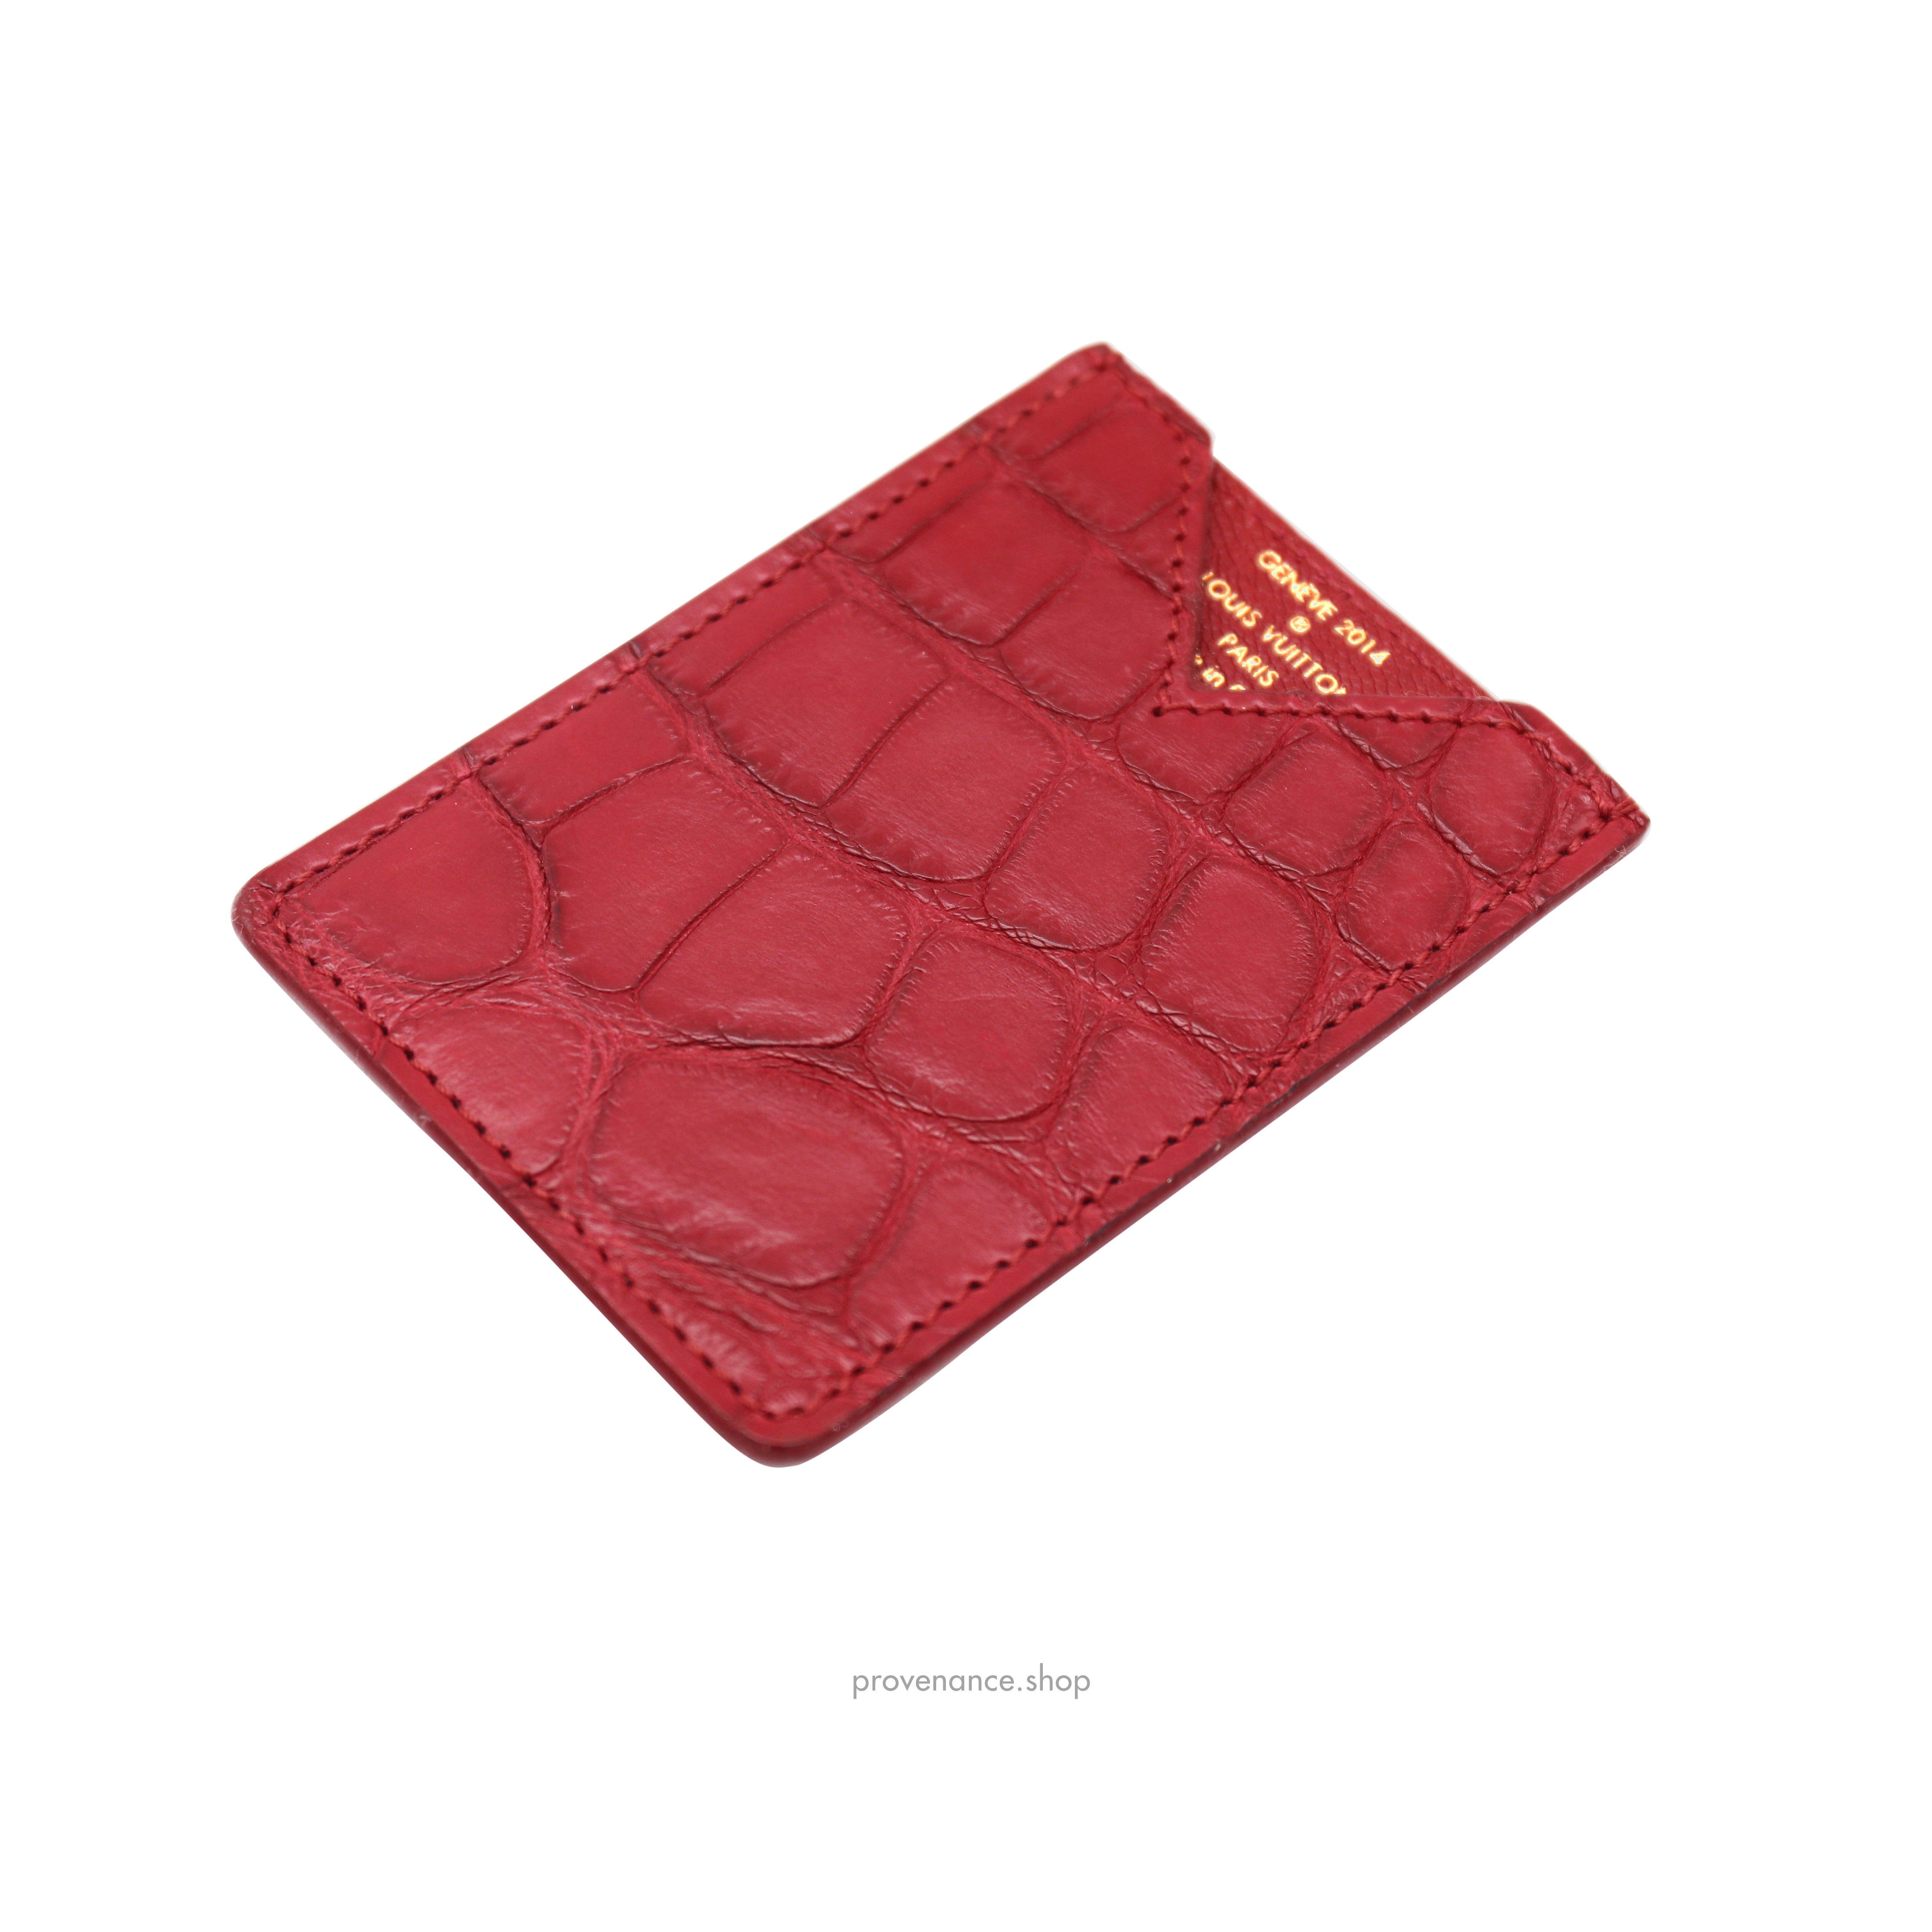 Gator leather Louis Vuitton wallet